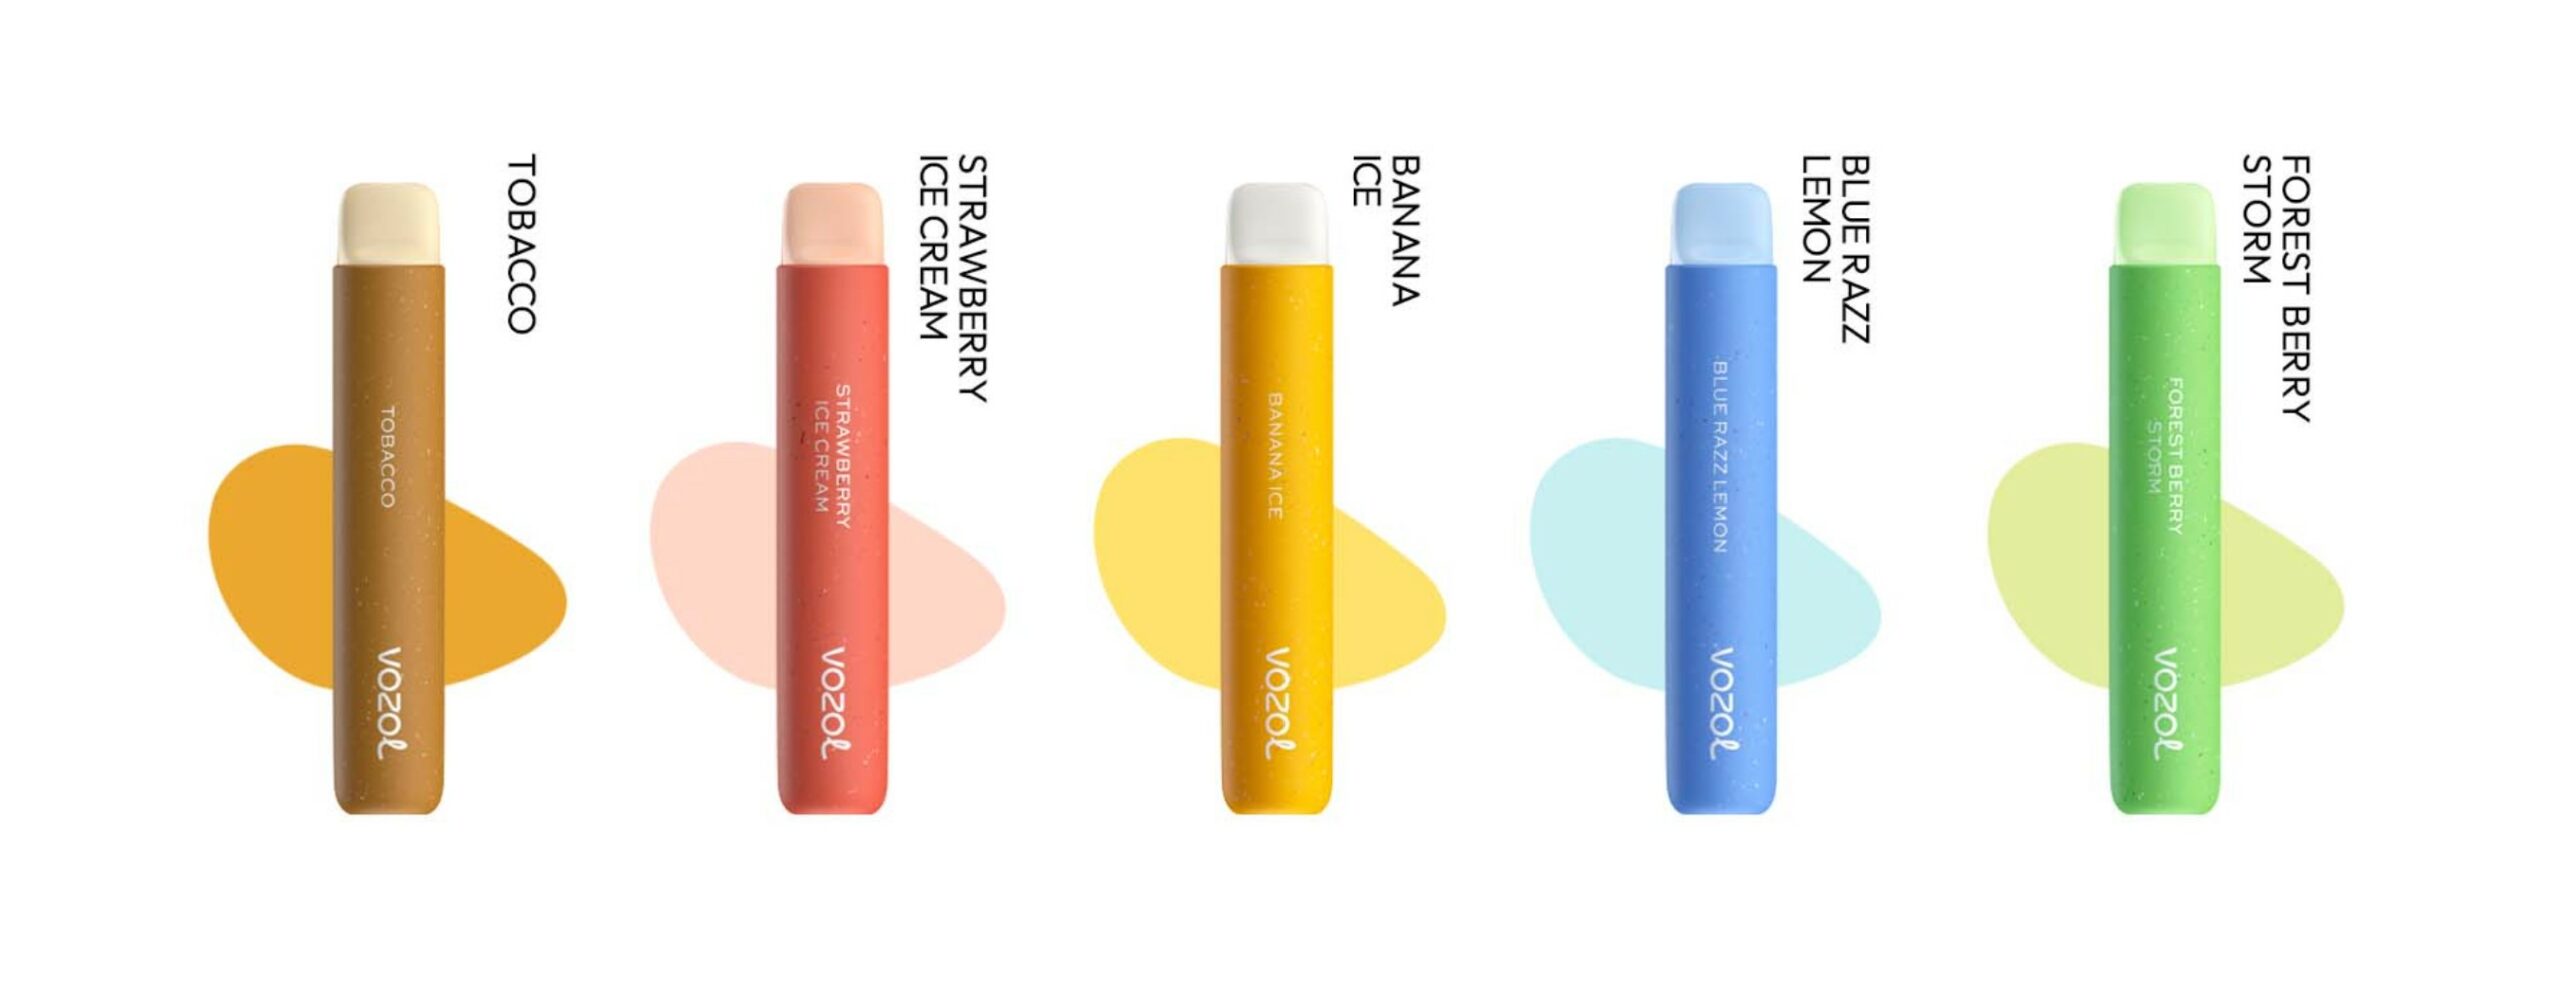 Vozol star 600 disposable kit flavours 3